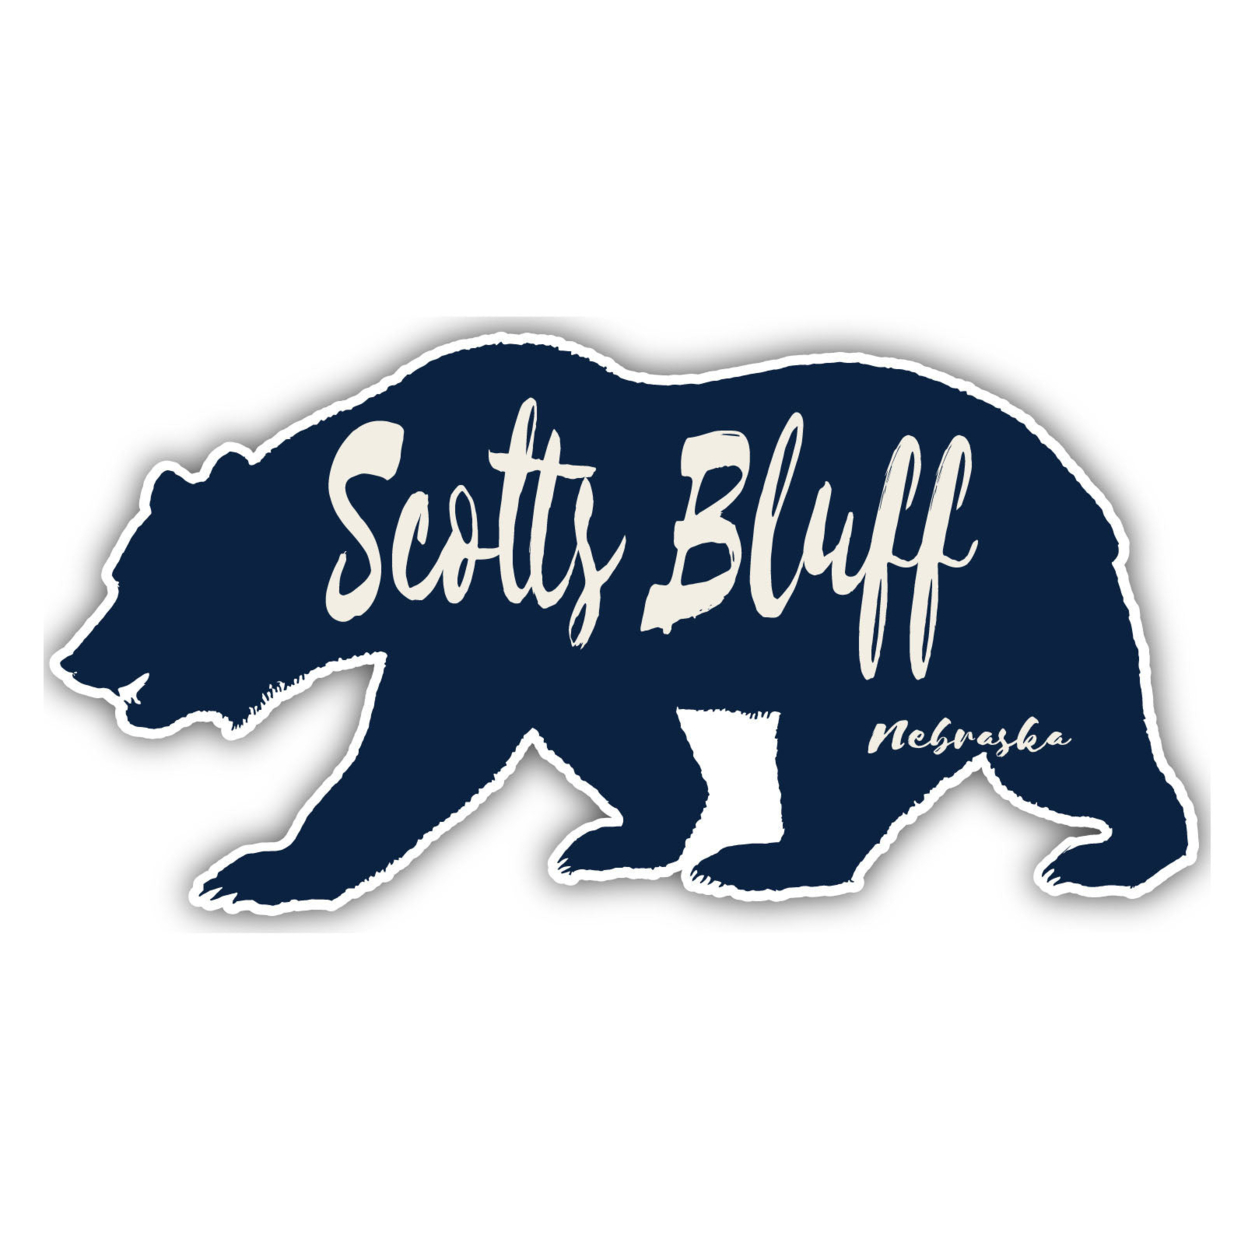 Scotts Bluff Nebraska Souvenir Decorative Stickers (Choose Theme And Size) - Single Unit, 4-Inch, Bear